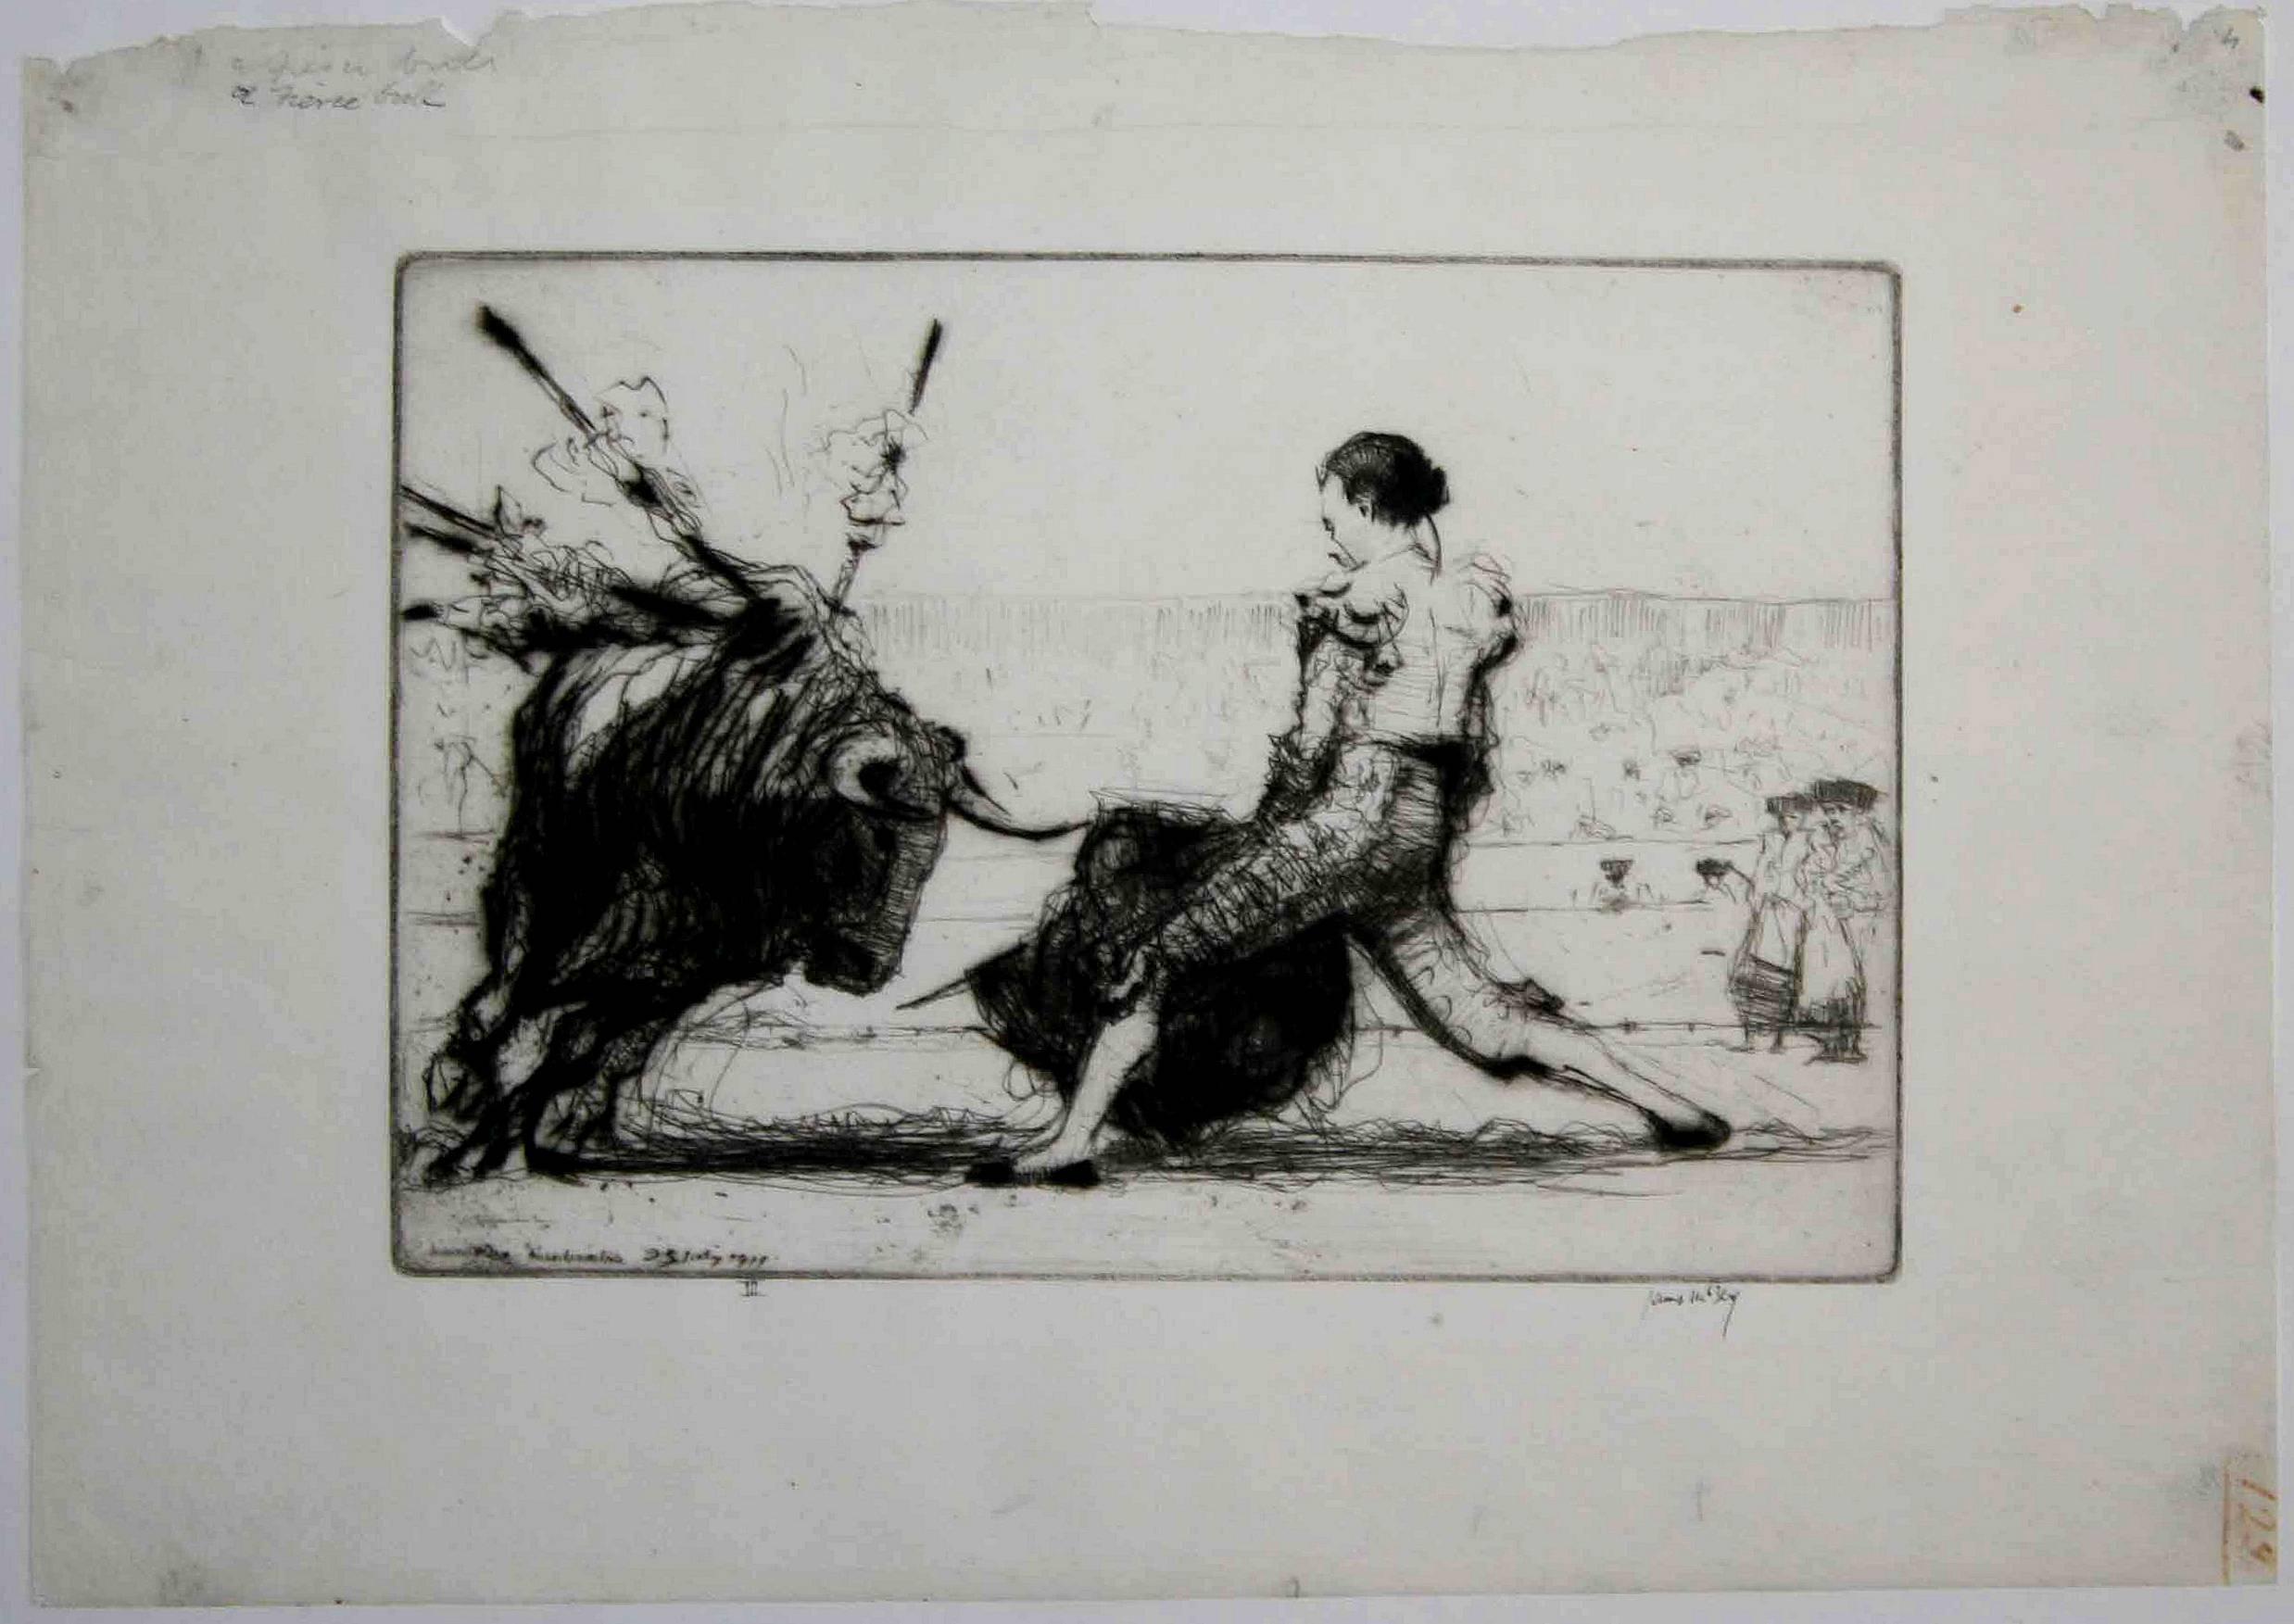 A Fierce Bull - Print by James McBey.